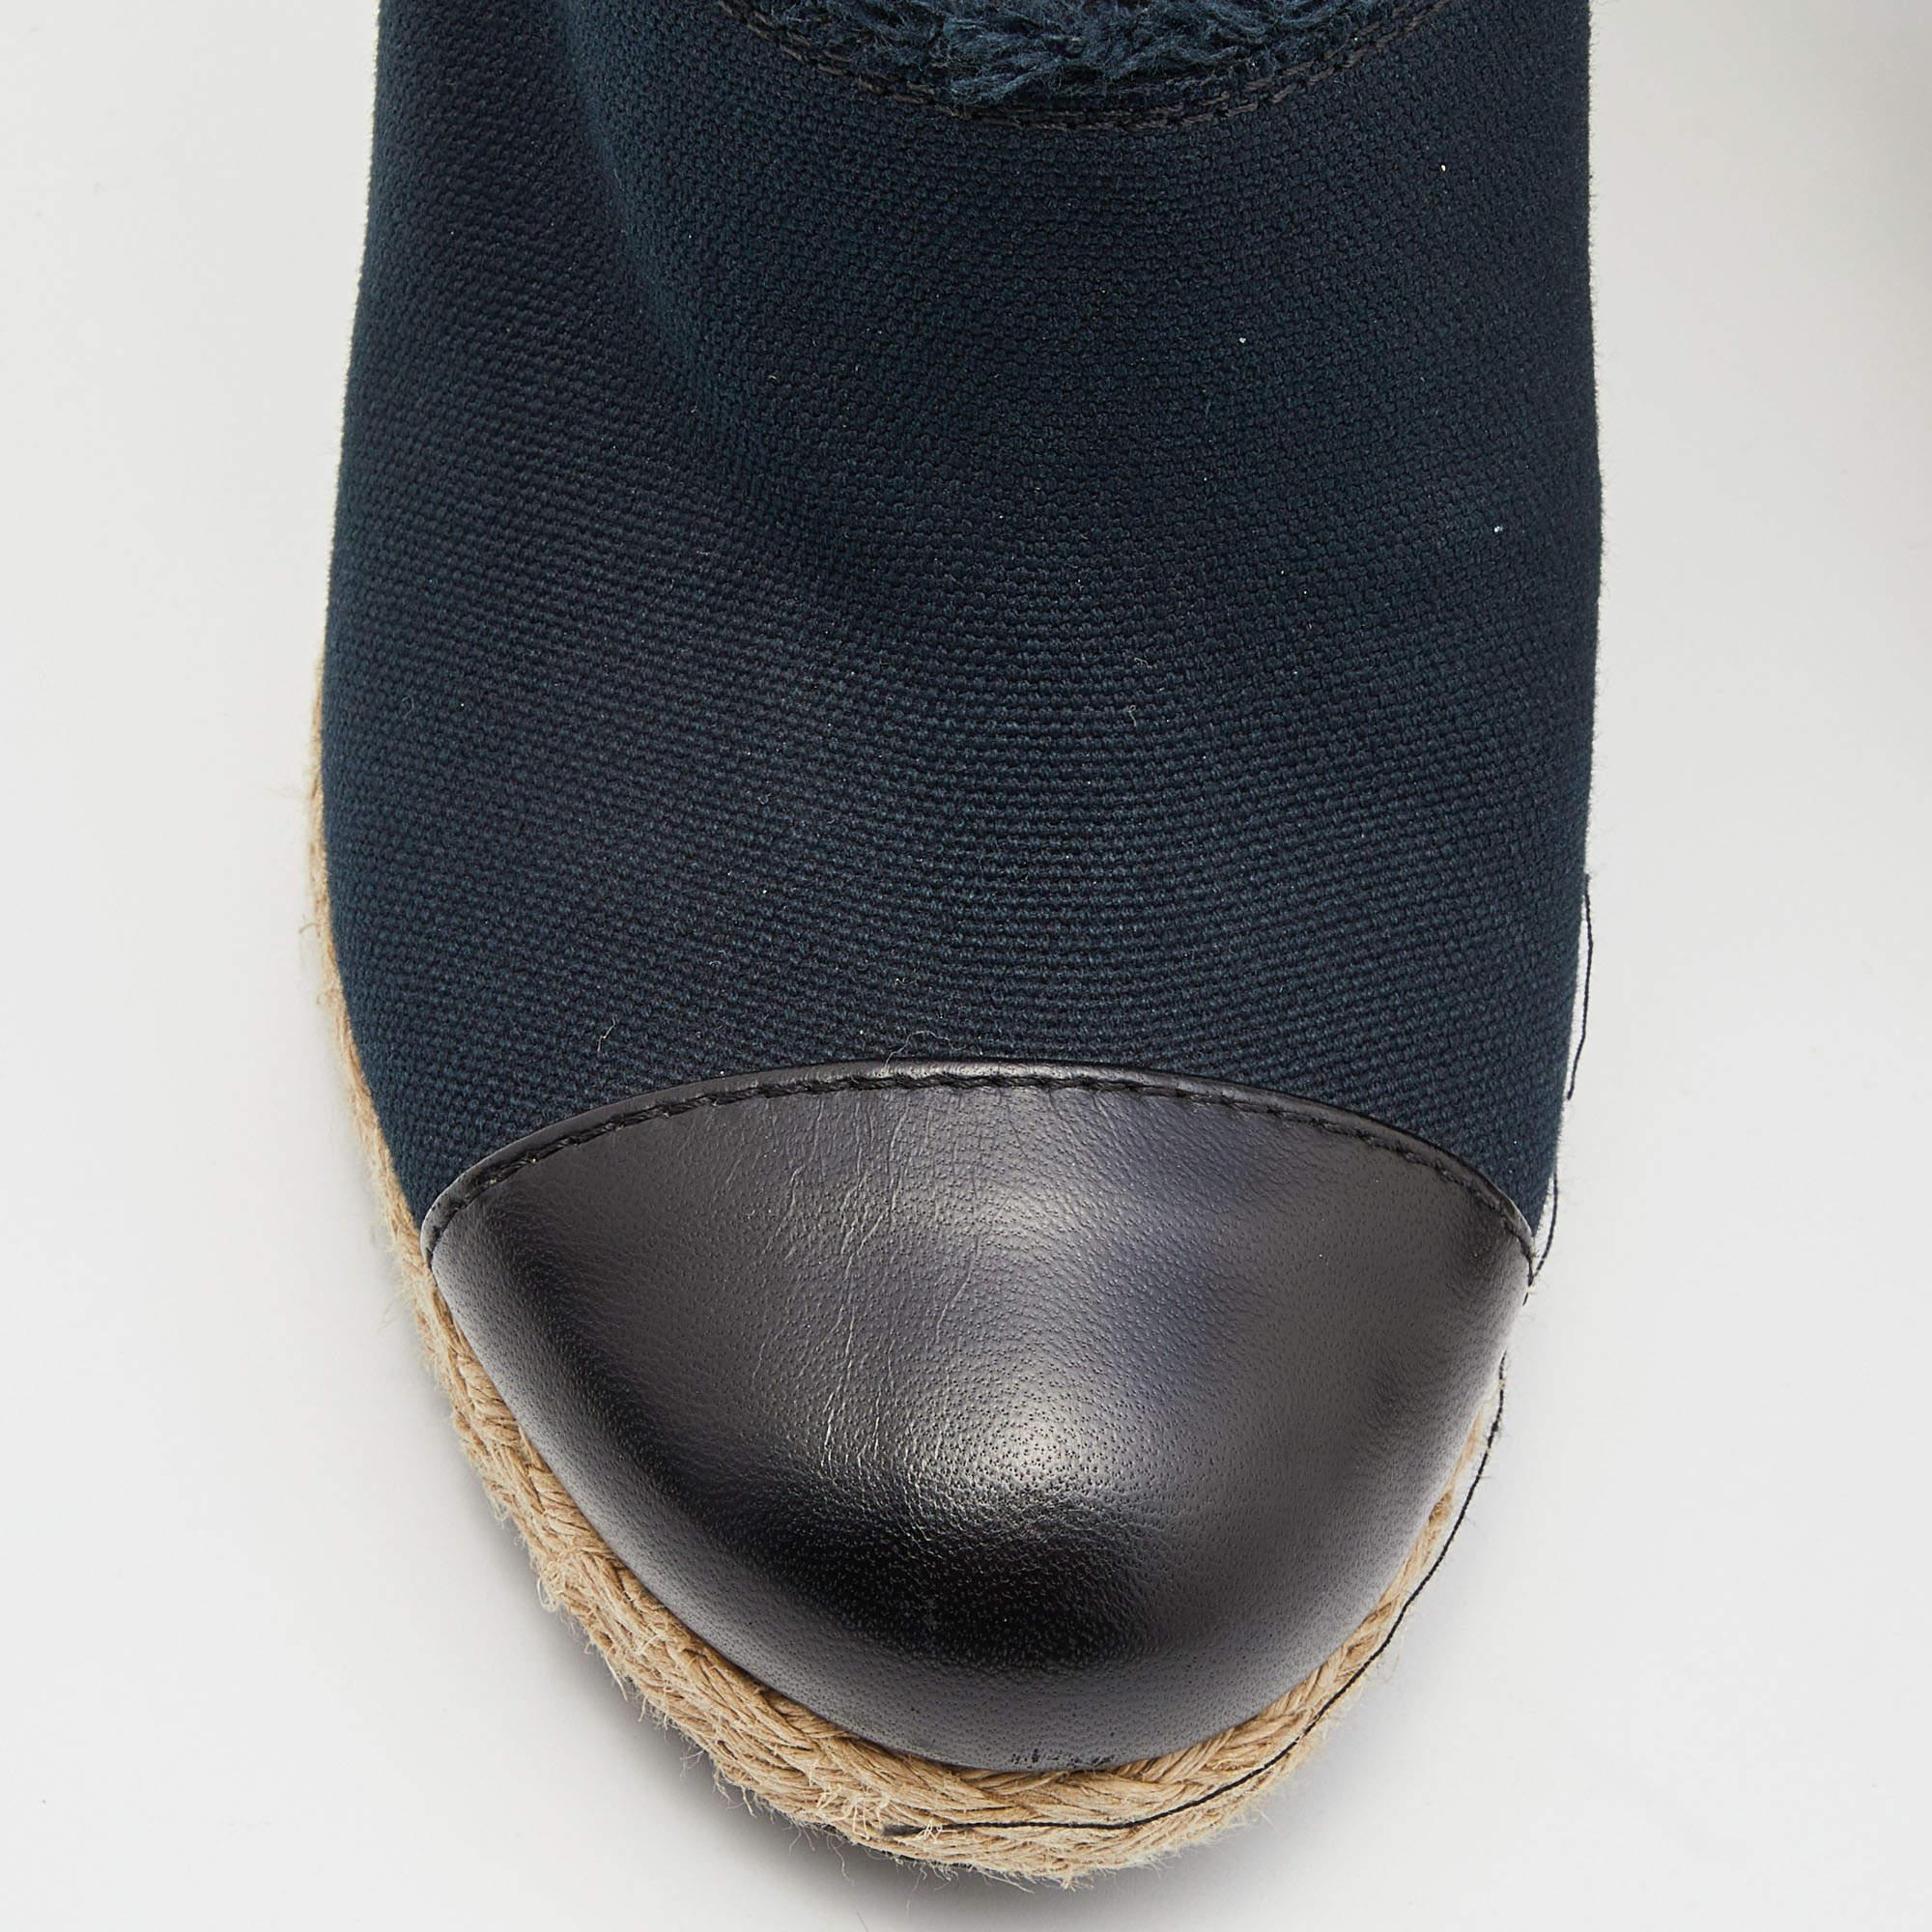 Chanel Dark Blue/Black Canvas and Leather Cap Toe Espadrilles Clogs Size 40 3